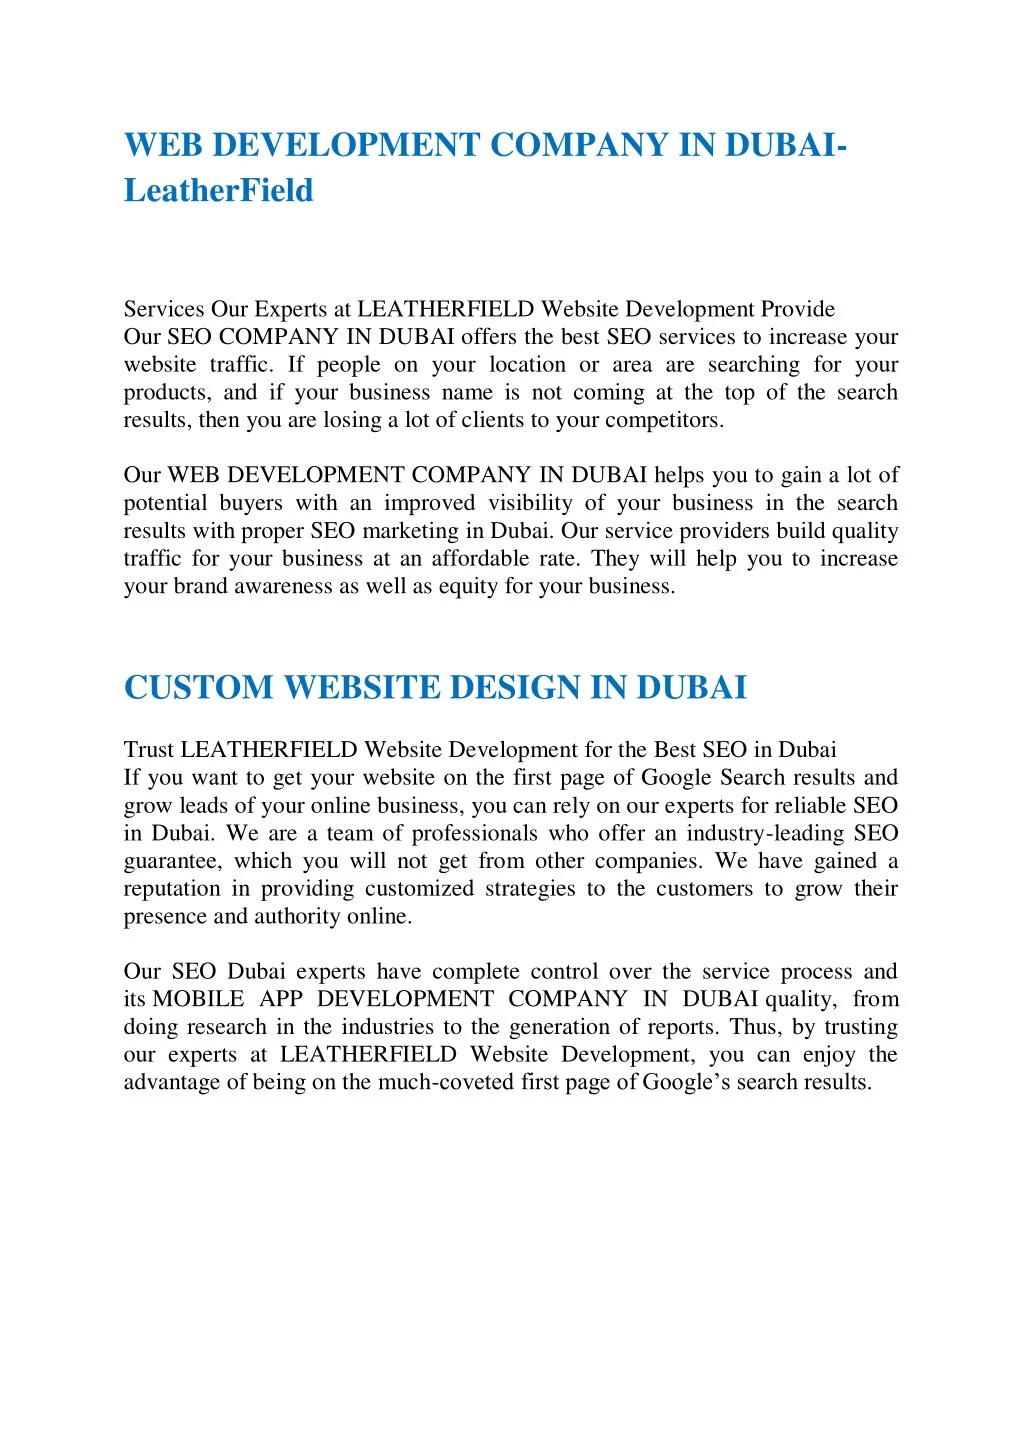 web development company in dubai leatherfield